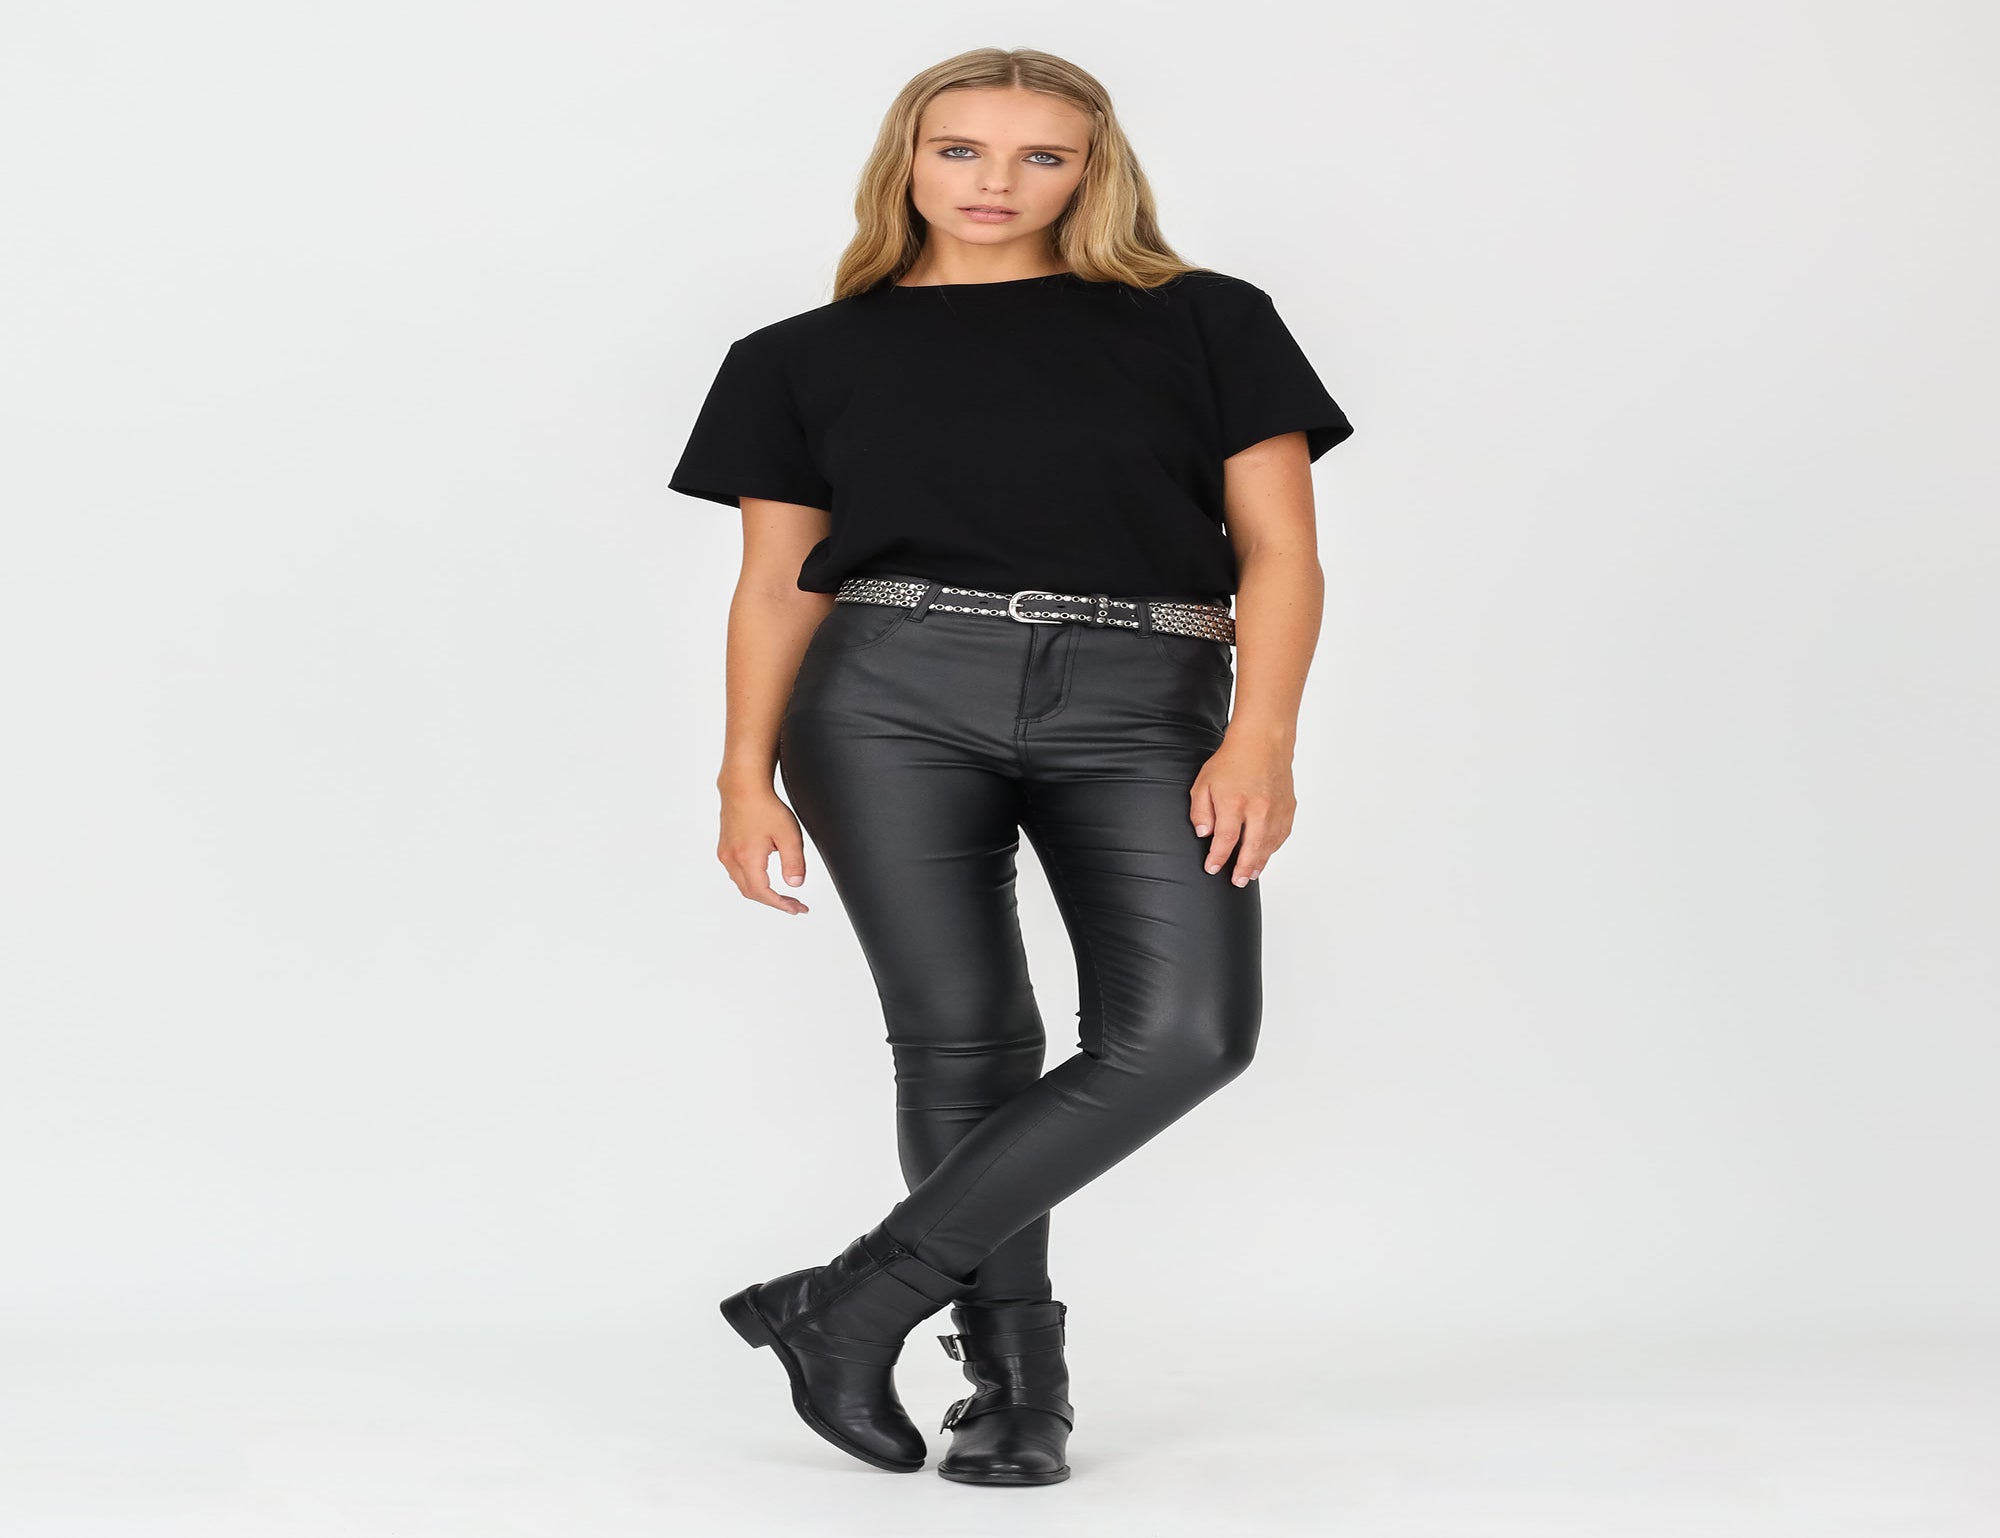 ZARA Cuffed Leather Pants for Women